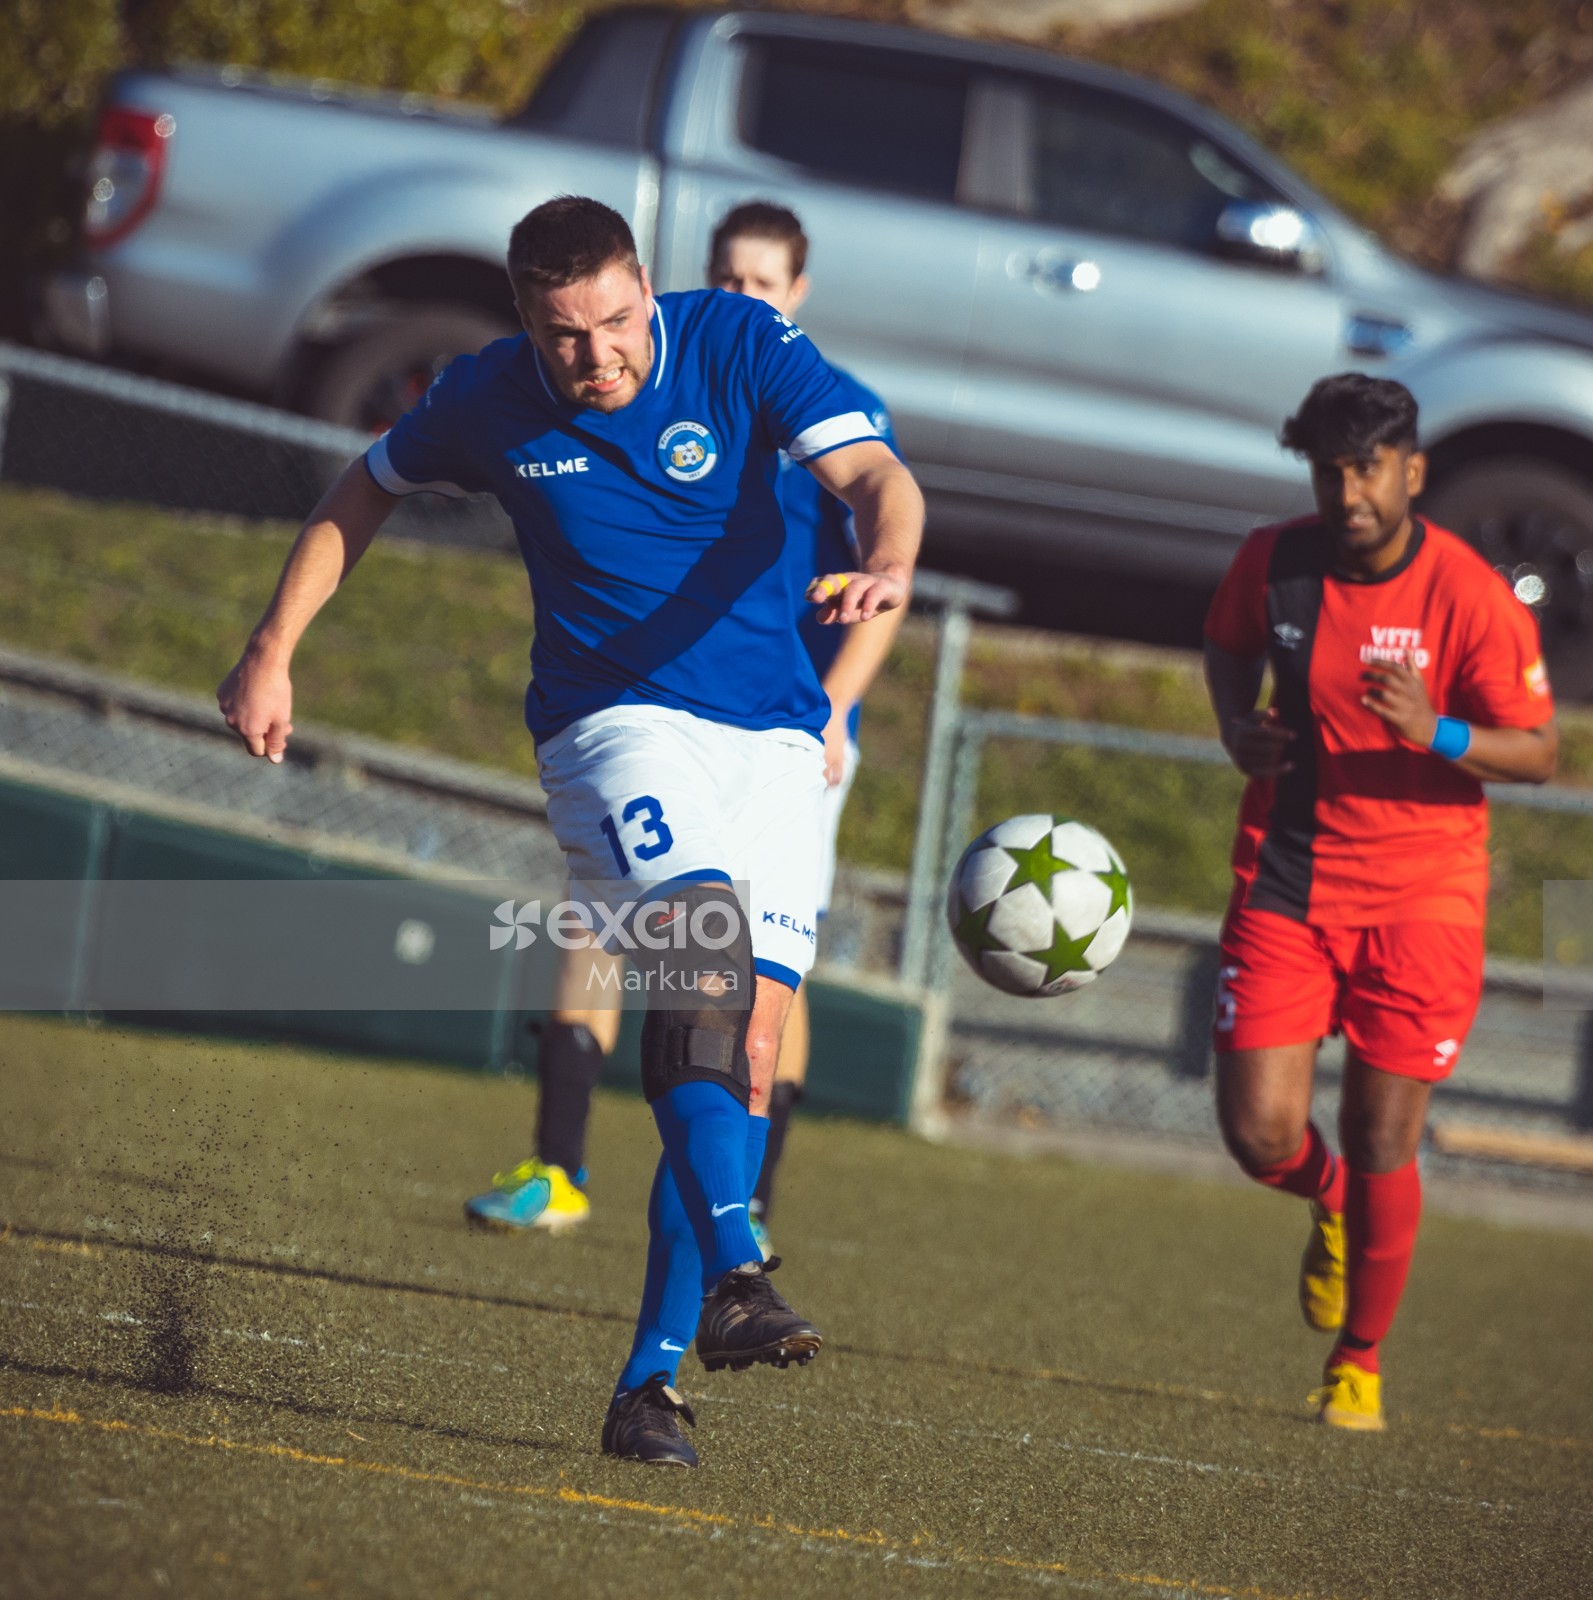 Player wearing blue Kelme shirt kicks football - Sports Zone sunday league